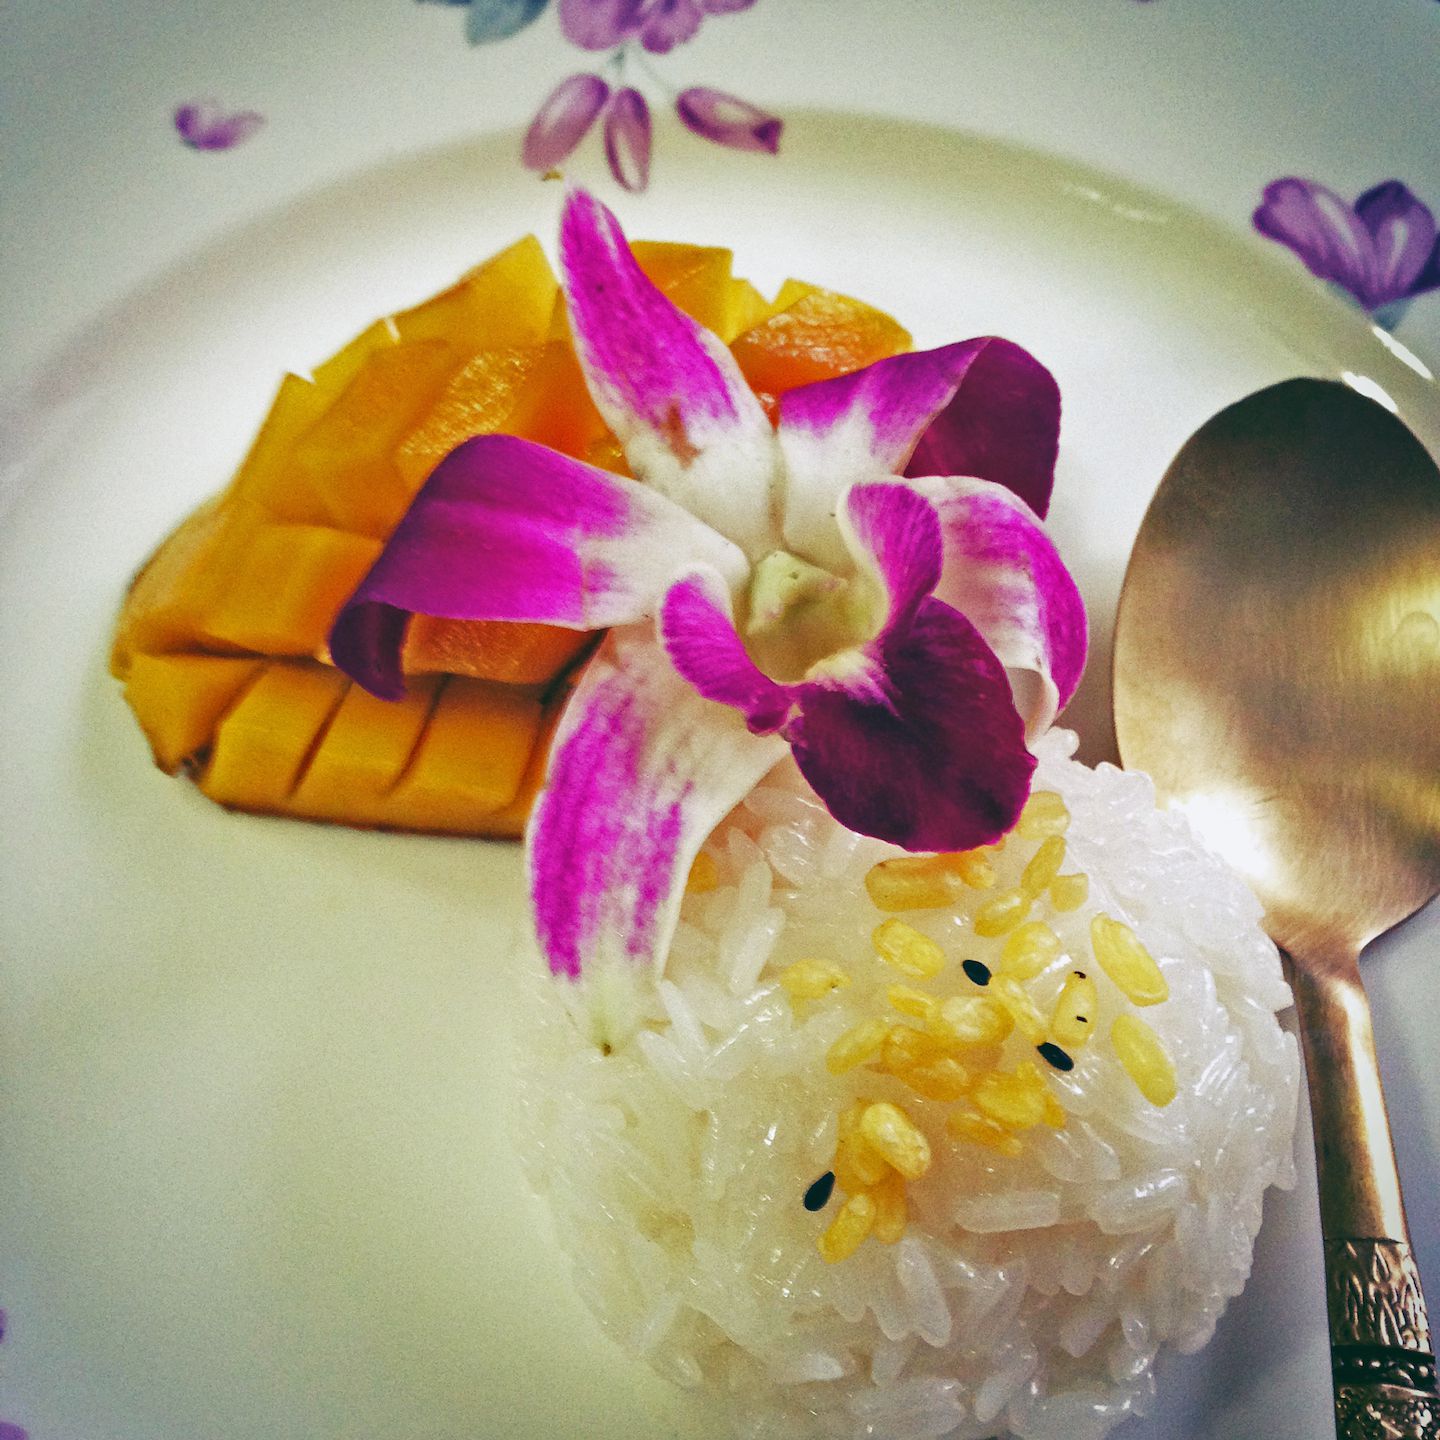 Mango sticky rice for dessert , Silom Cooking School, Bangkok, Thailand